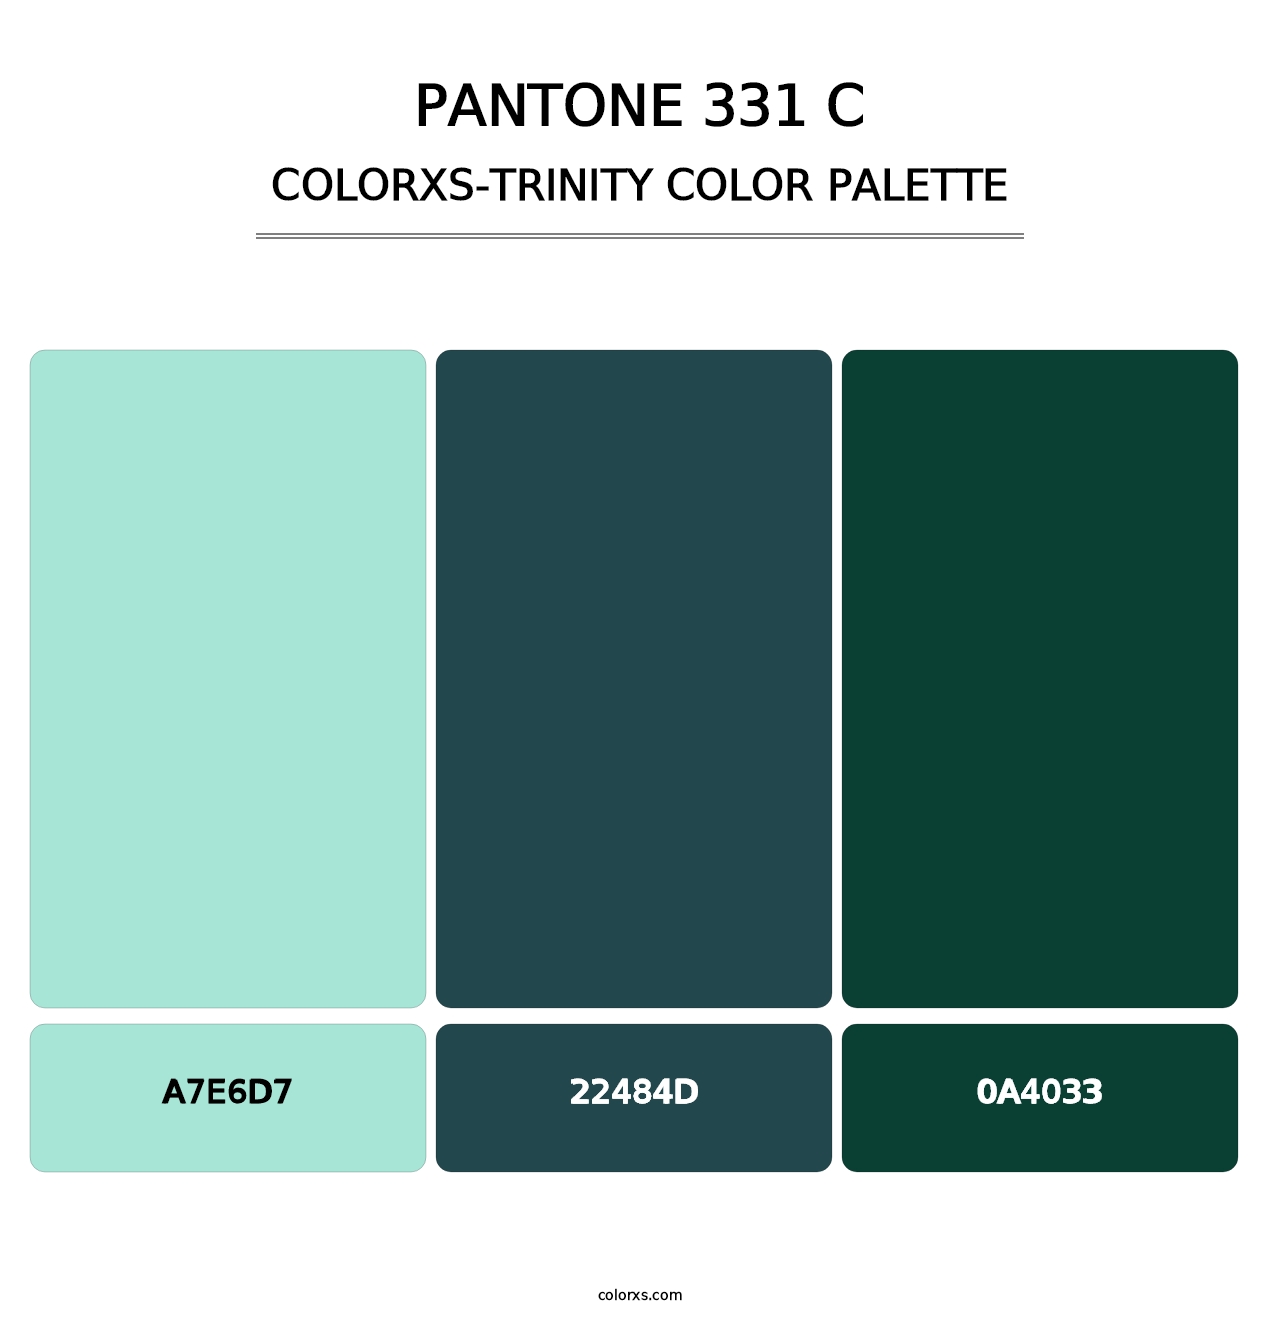 PANTONE 331 C - Colorxs Trinity Palette